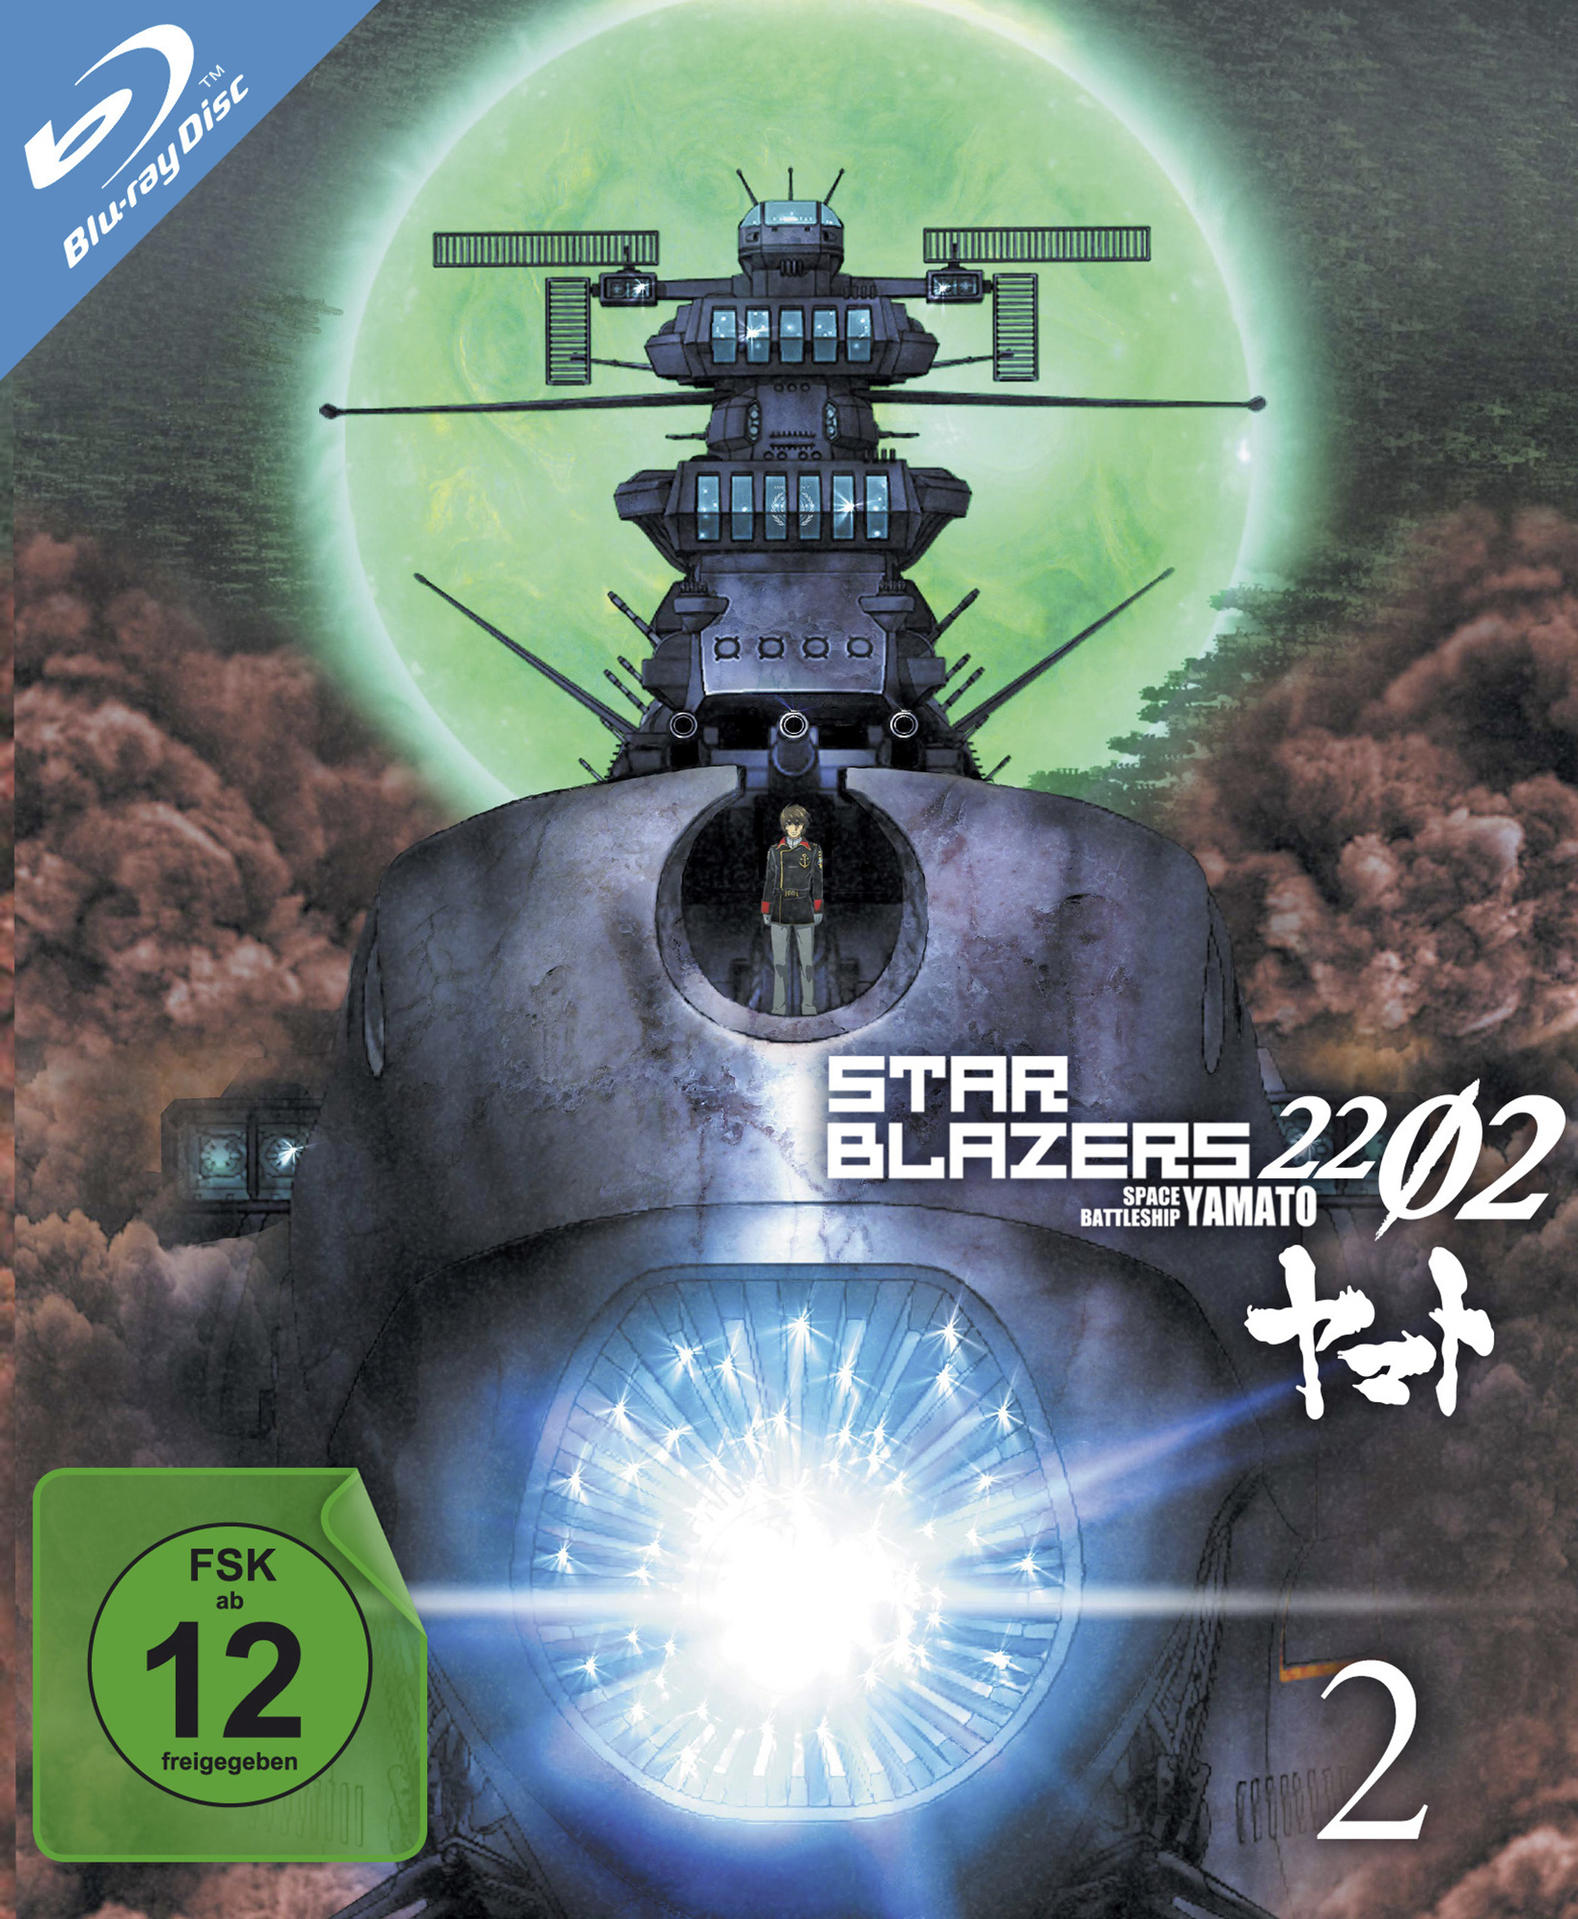 Star Blazers 2202 - Space - Blu-ray Yamato Battleship Vol.2